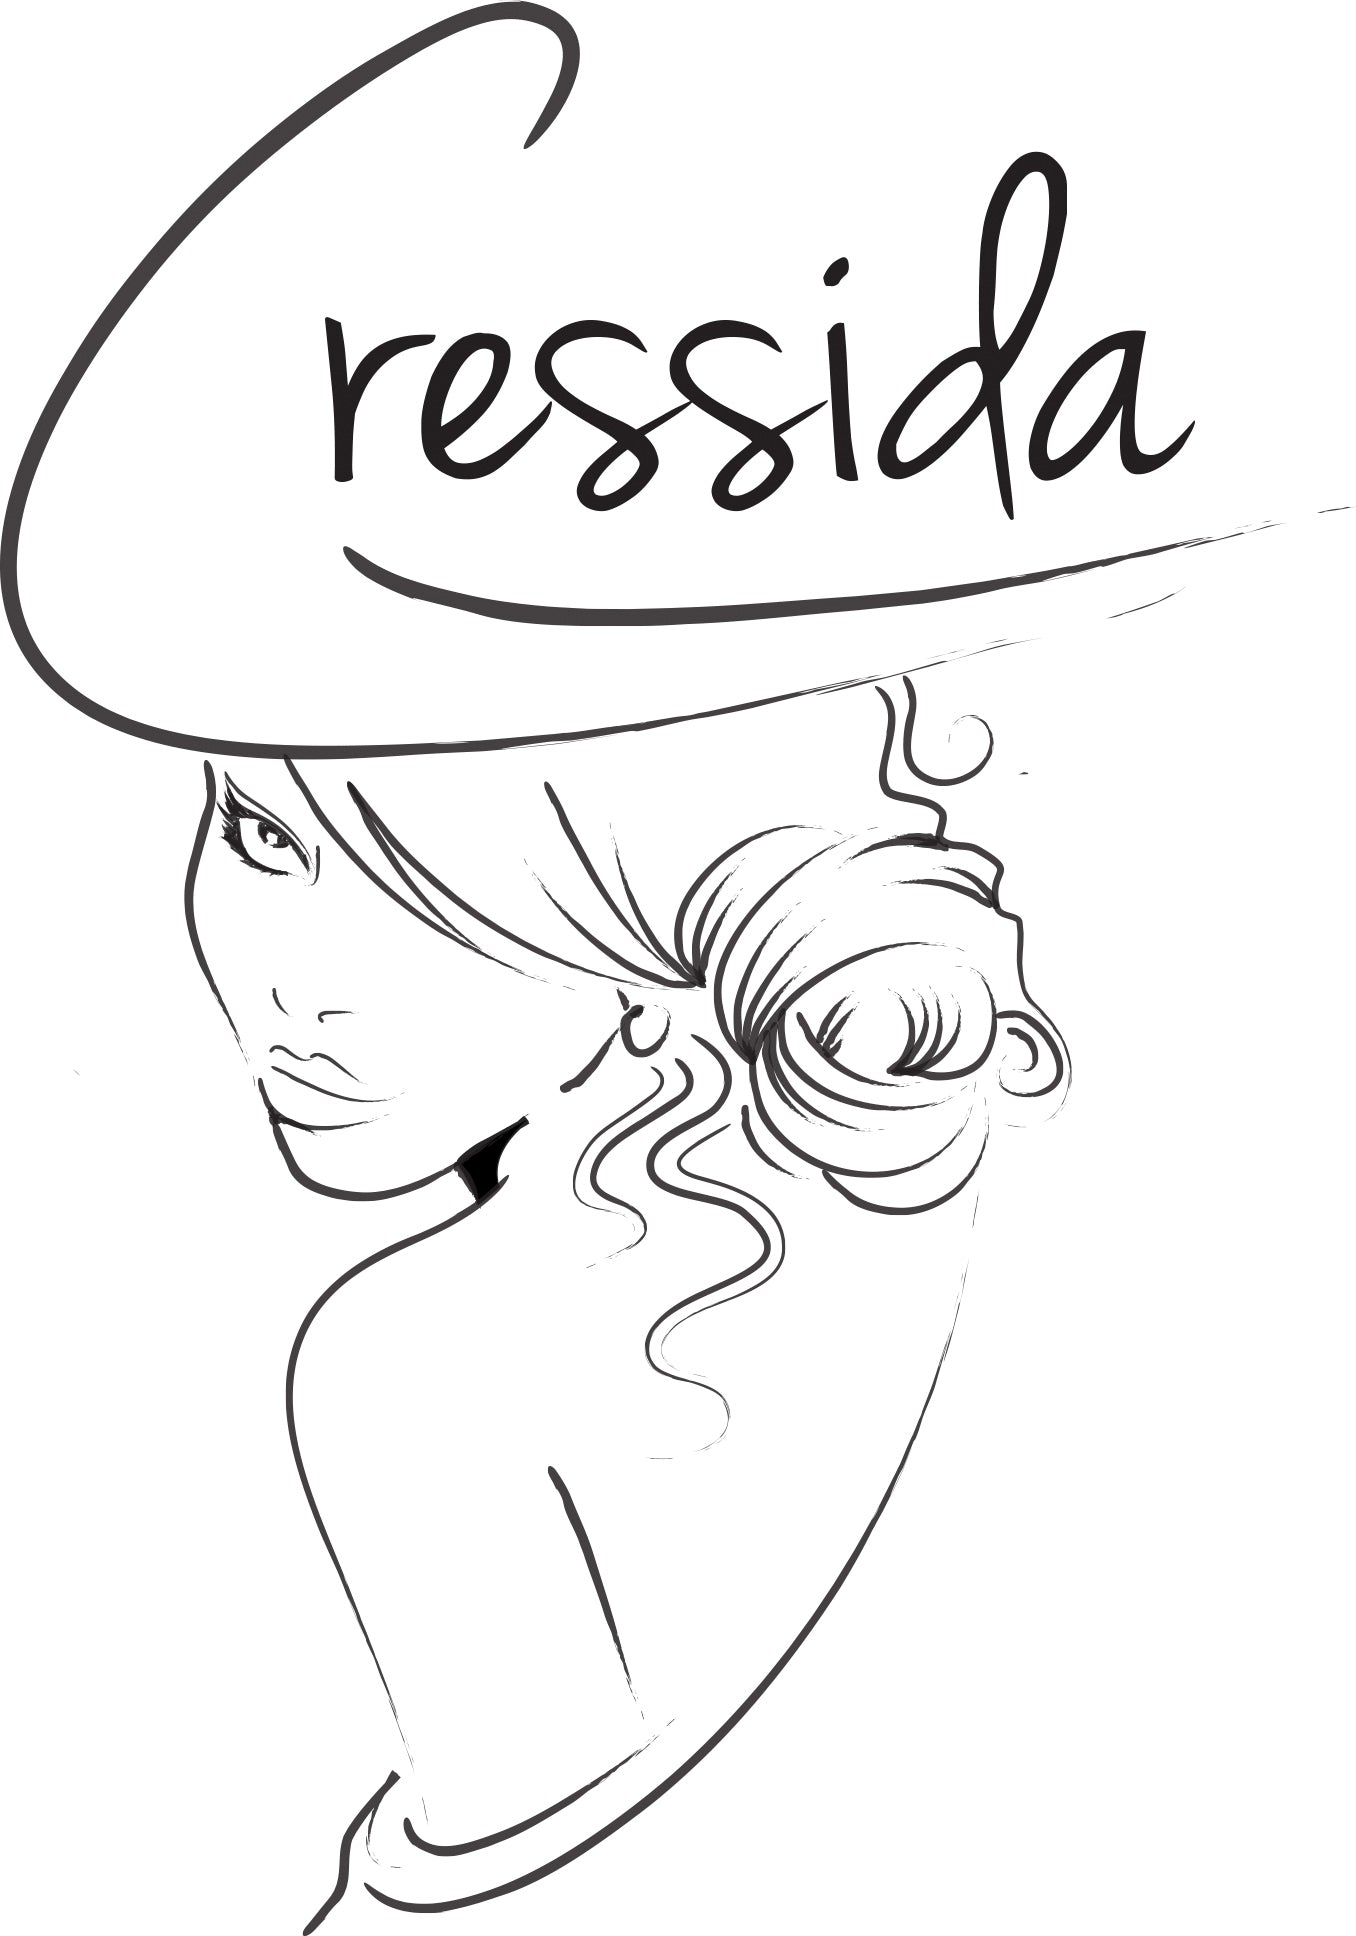 Hats By Cressida